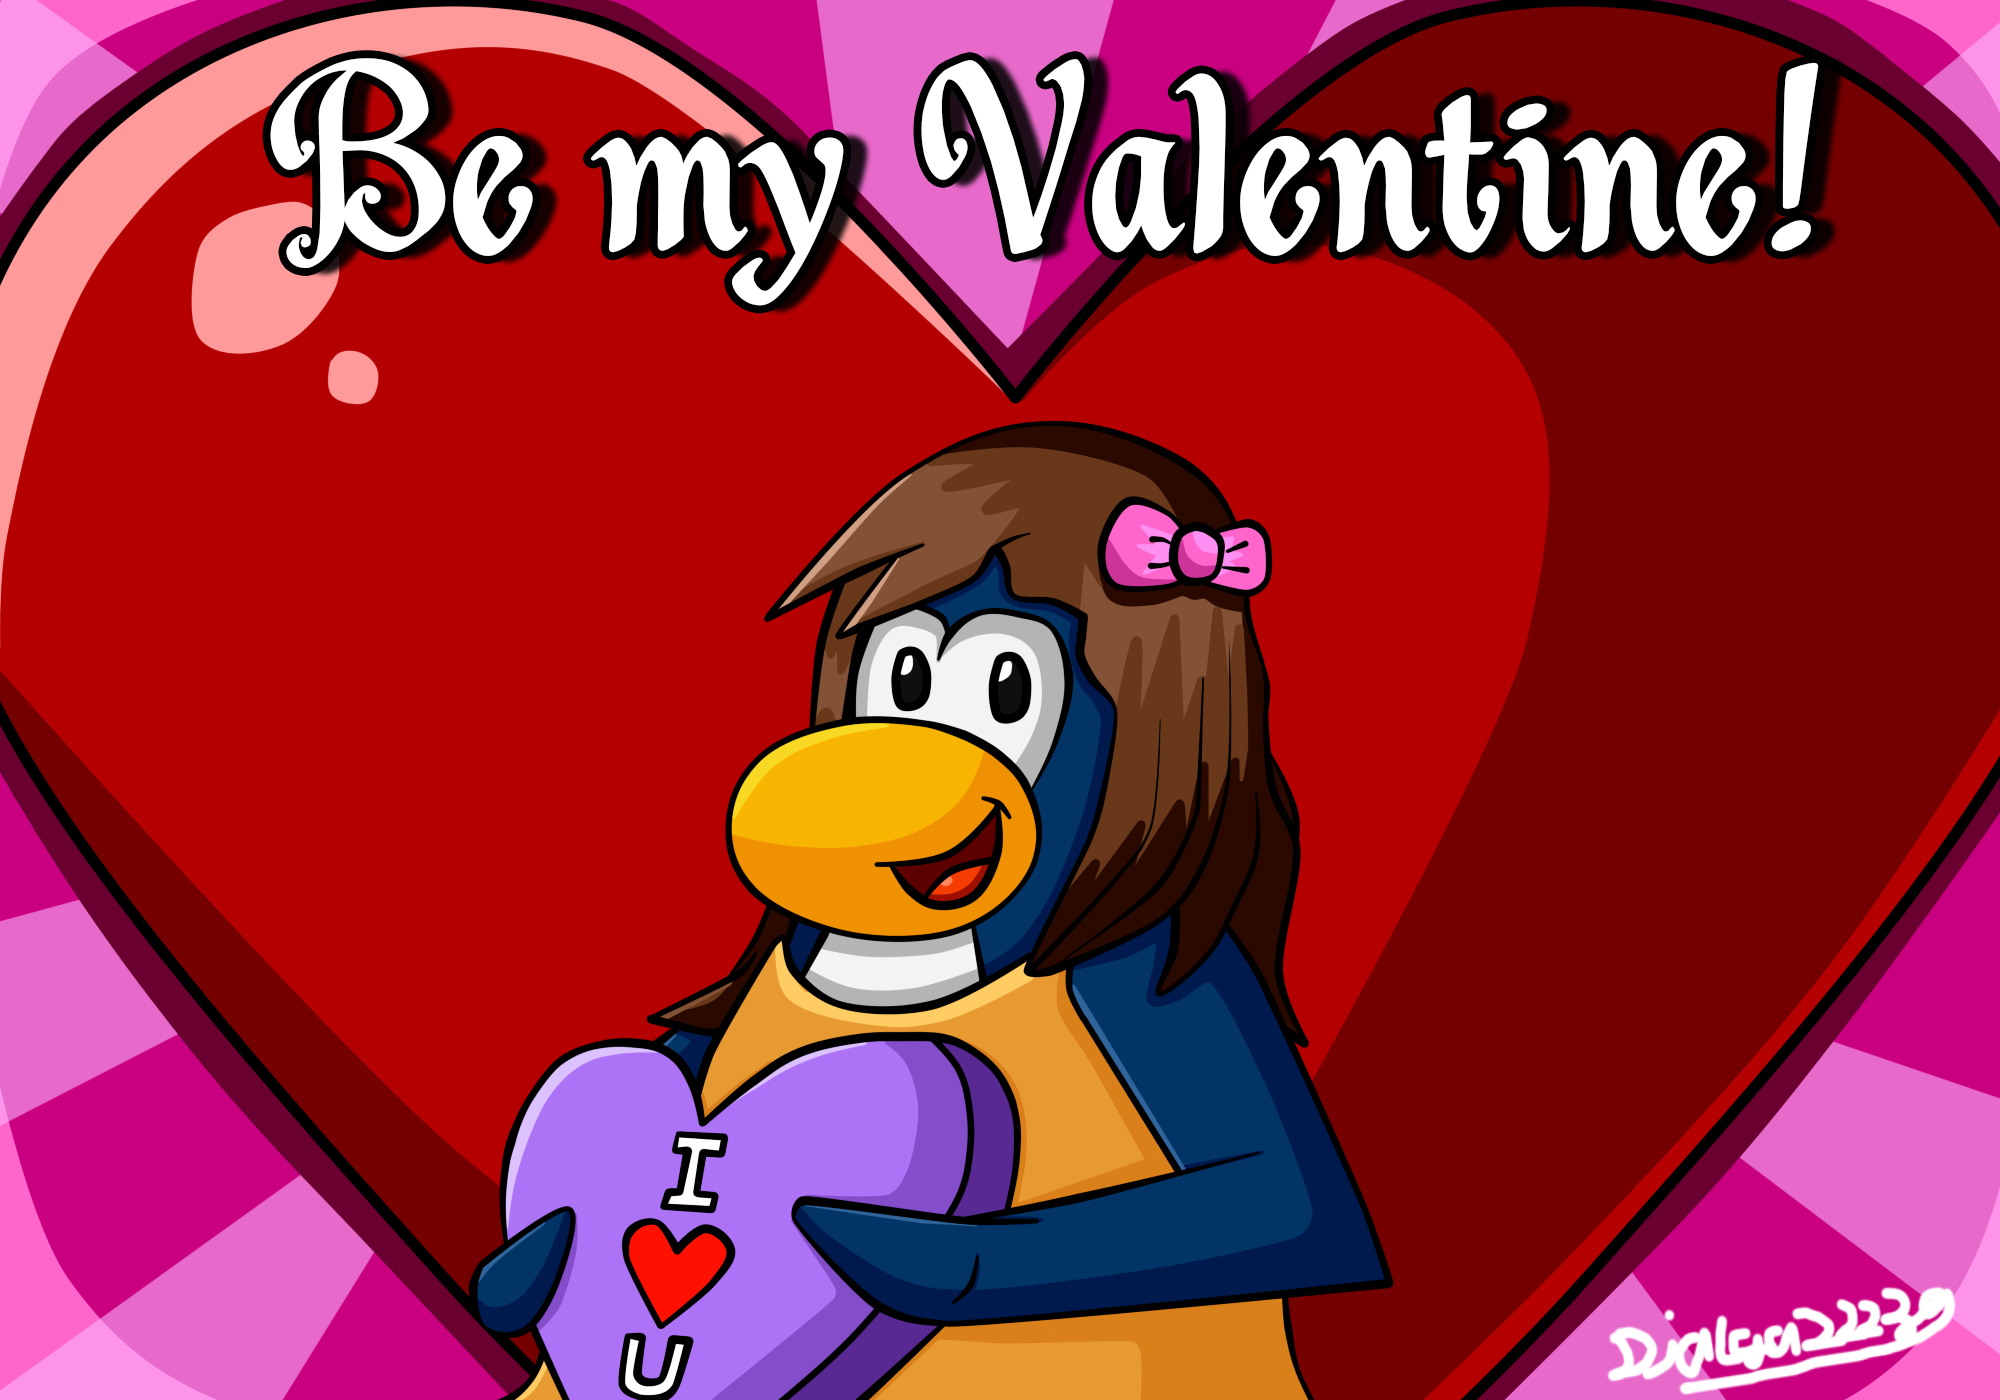 Club Penguin - Be my Valentine! by Dialga22239 on DeviantArt